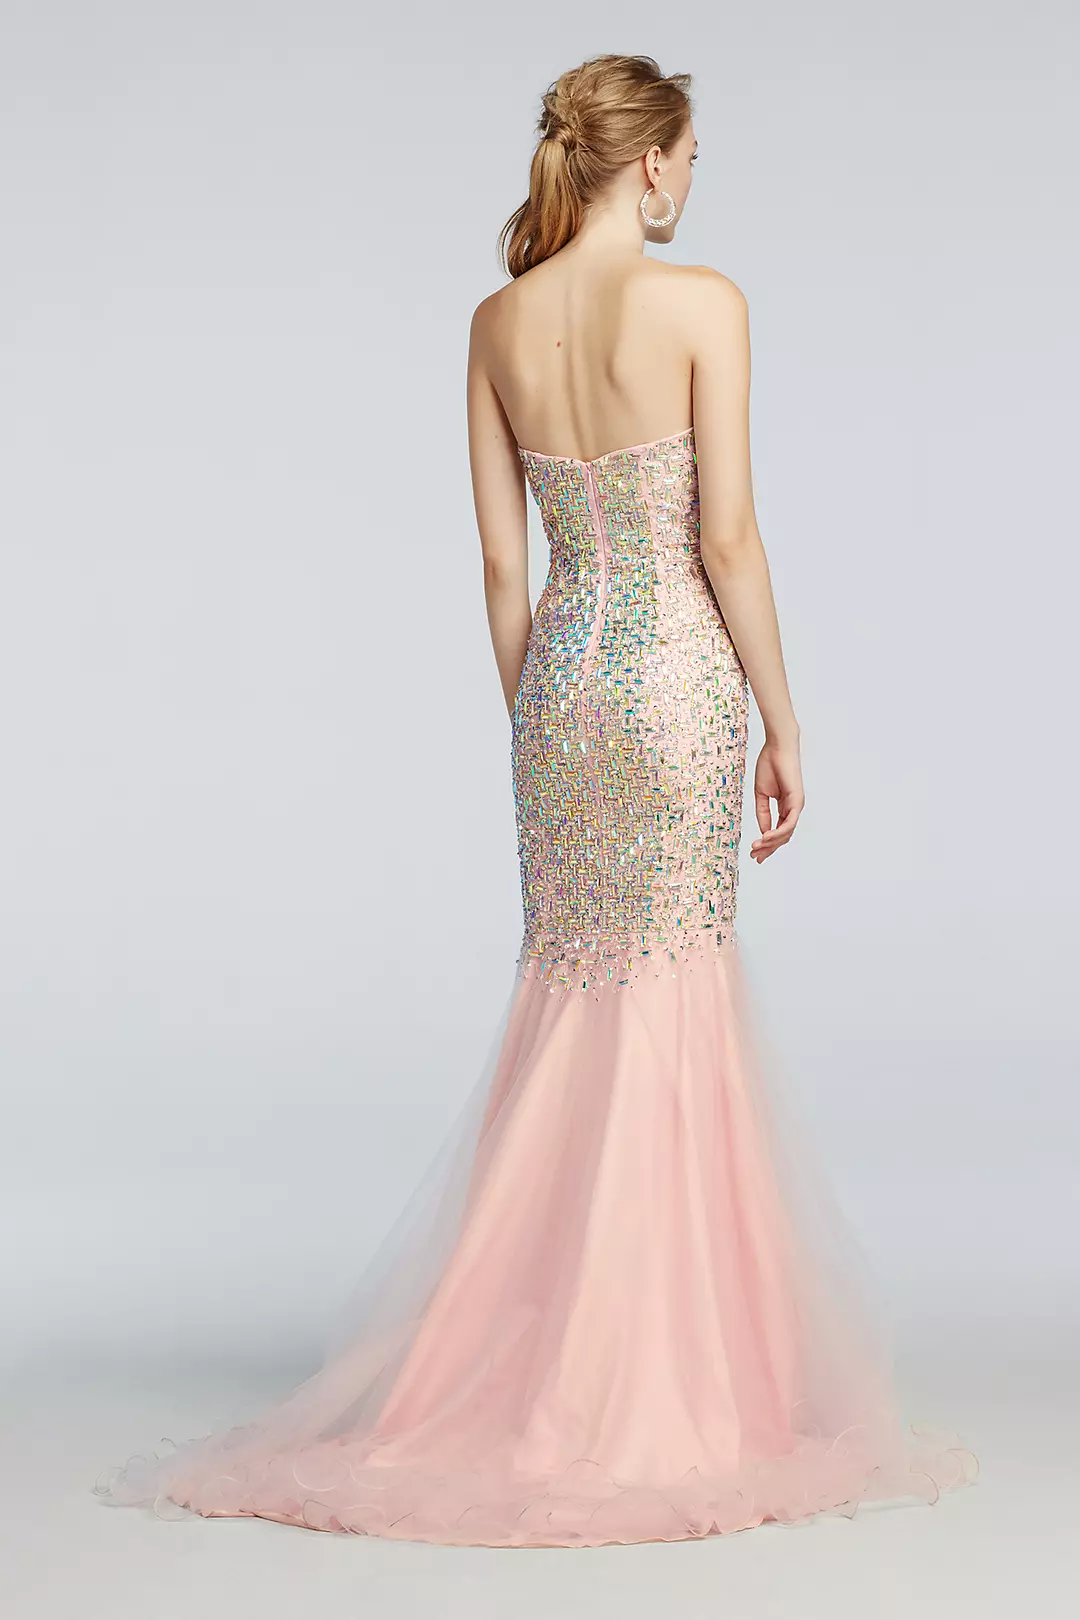 Crystal Beaded Mermaid Prom Dress with Train Image 2